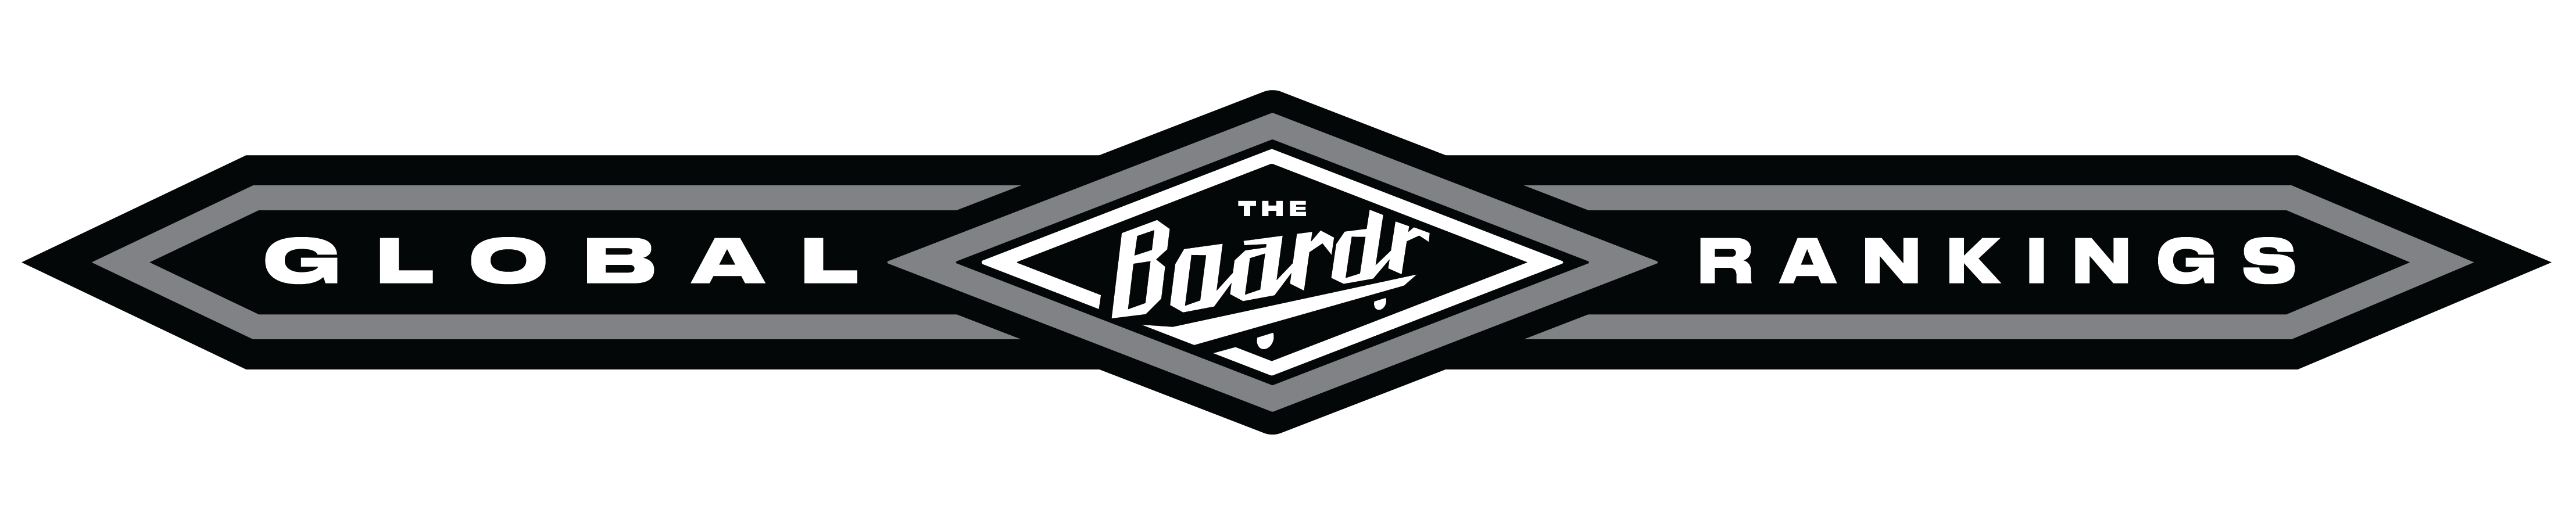 The Boardr Logo